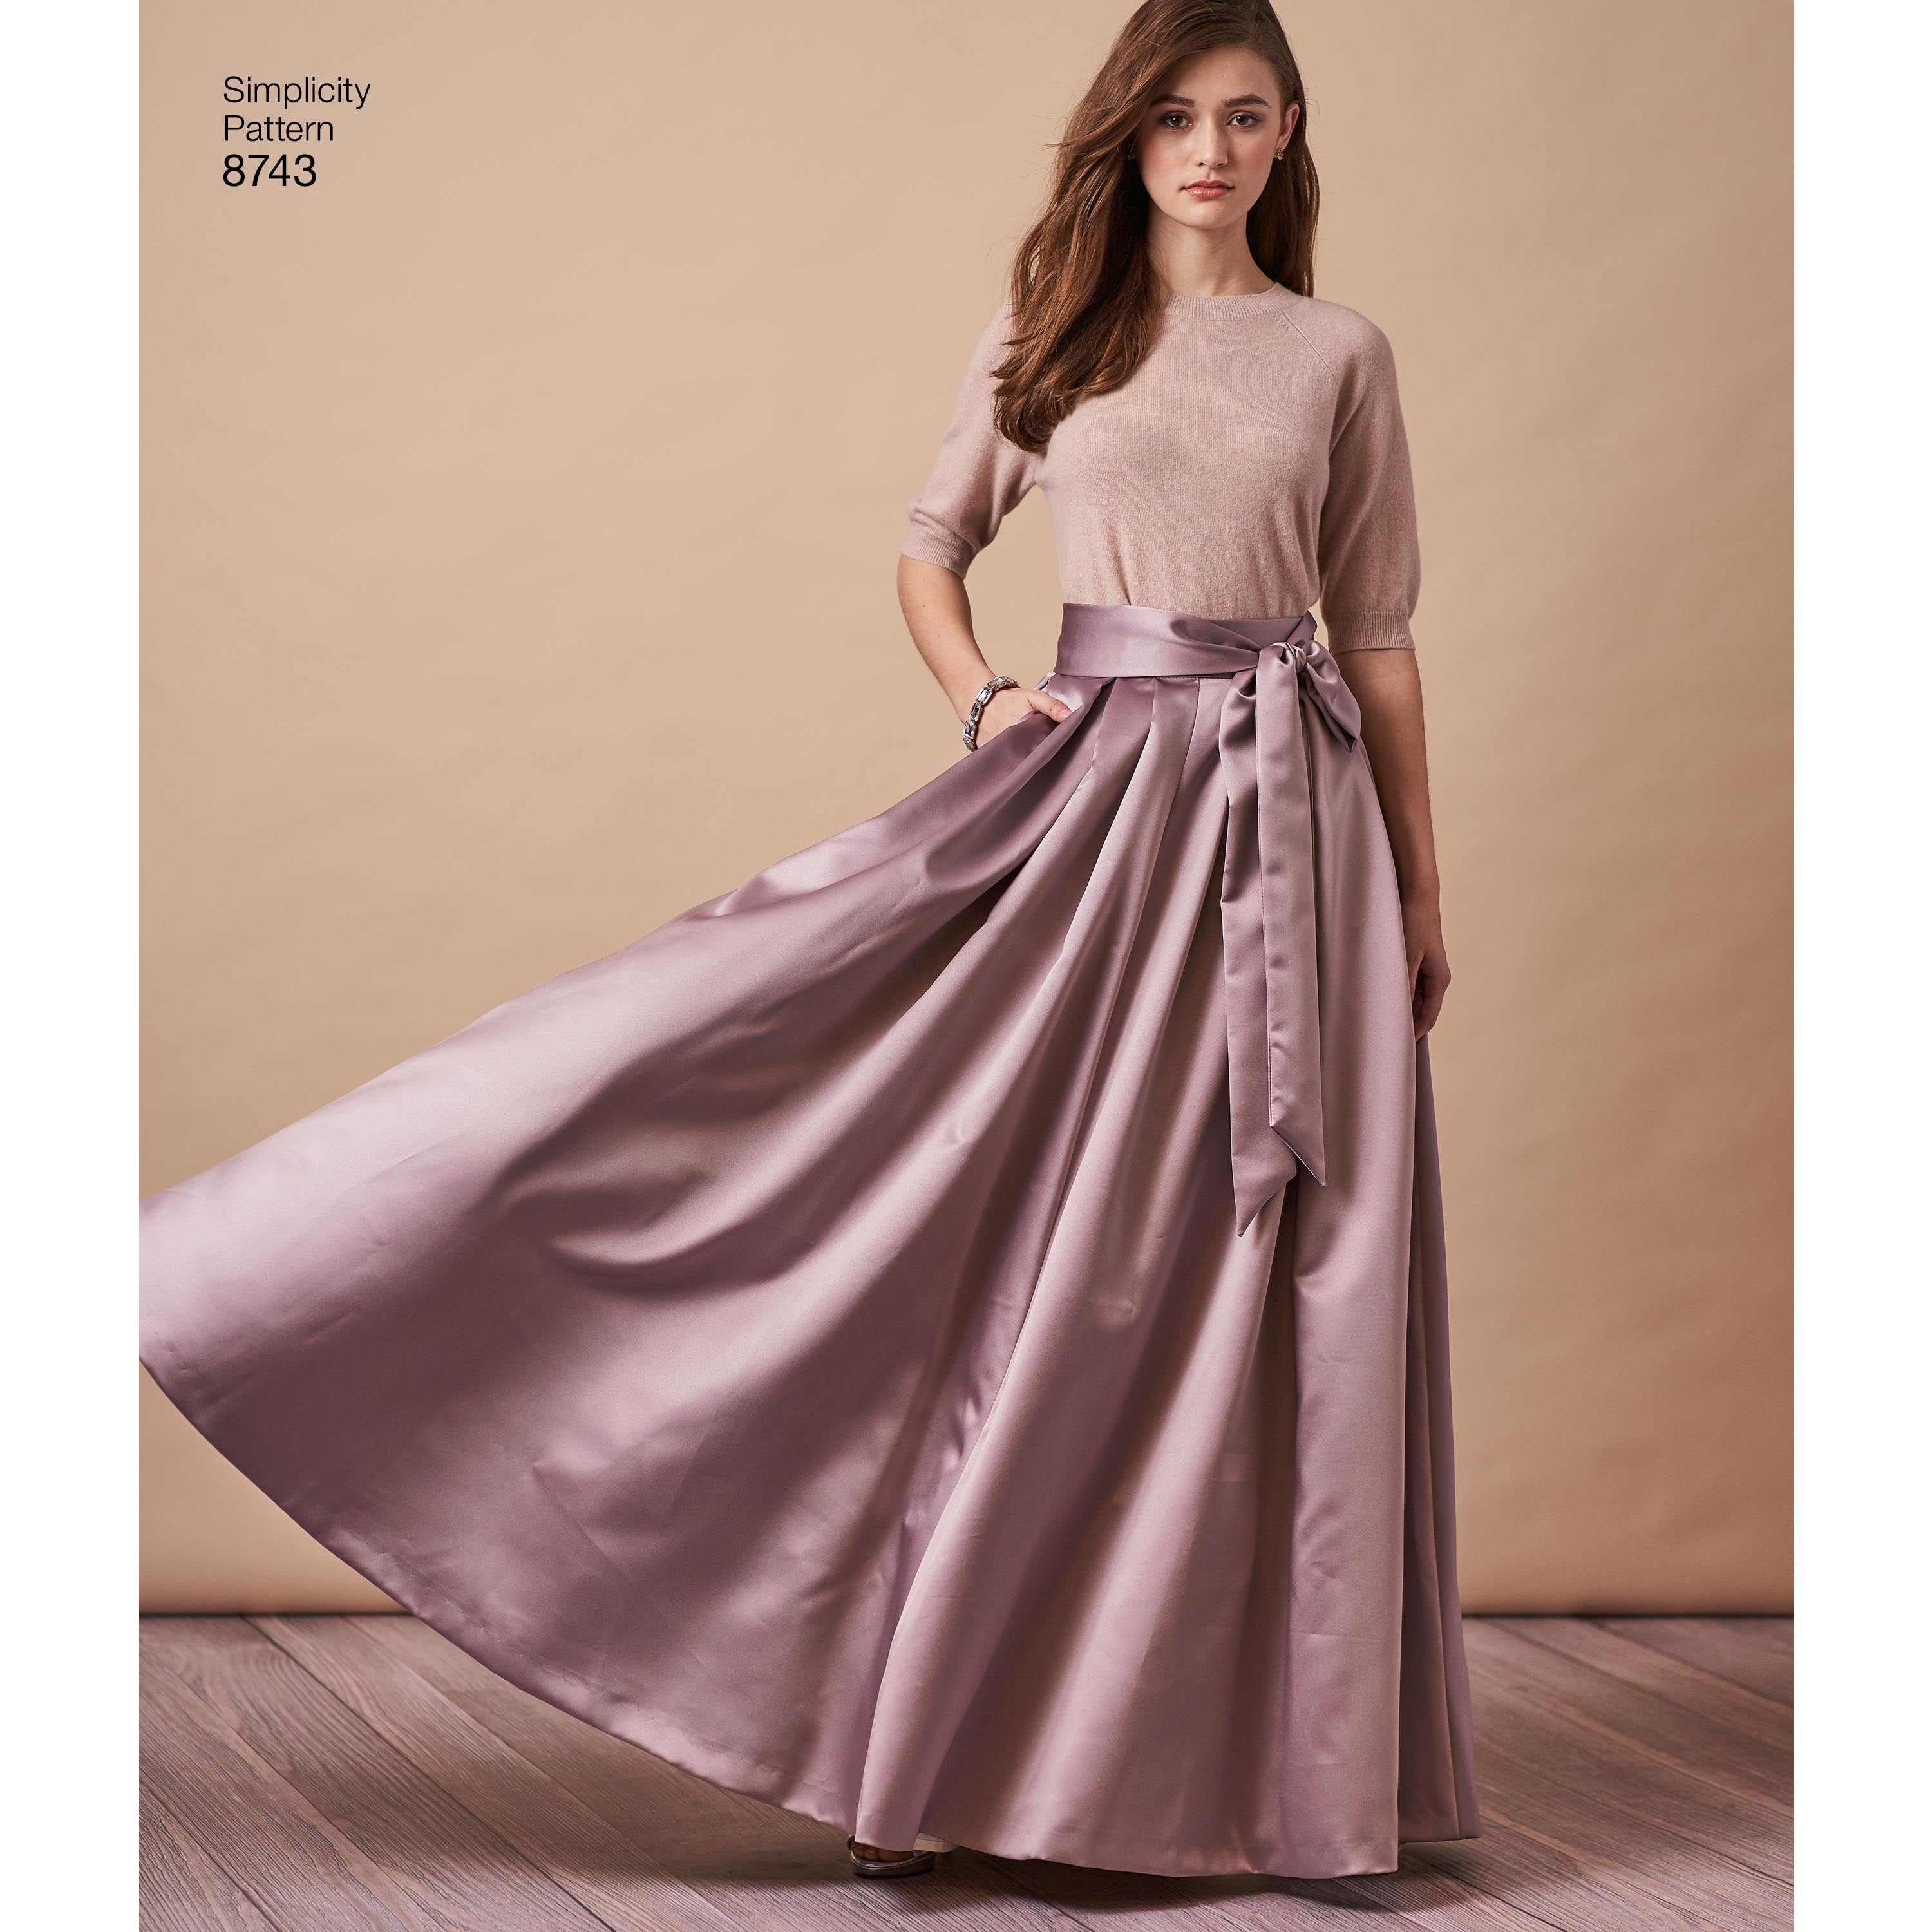 The Evie Bias Skirt Sewing Pattern by Tessuti | The Hemming